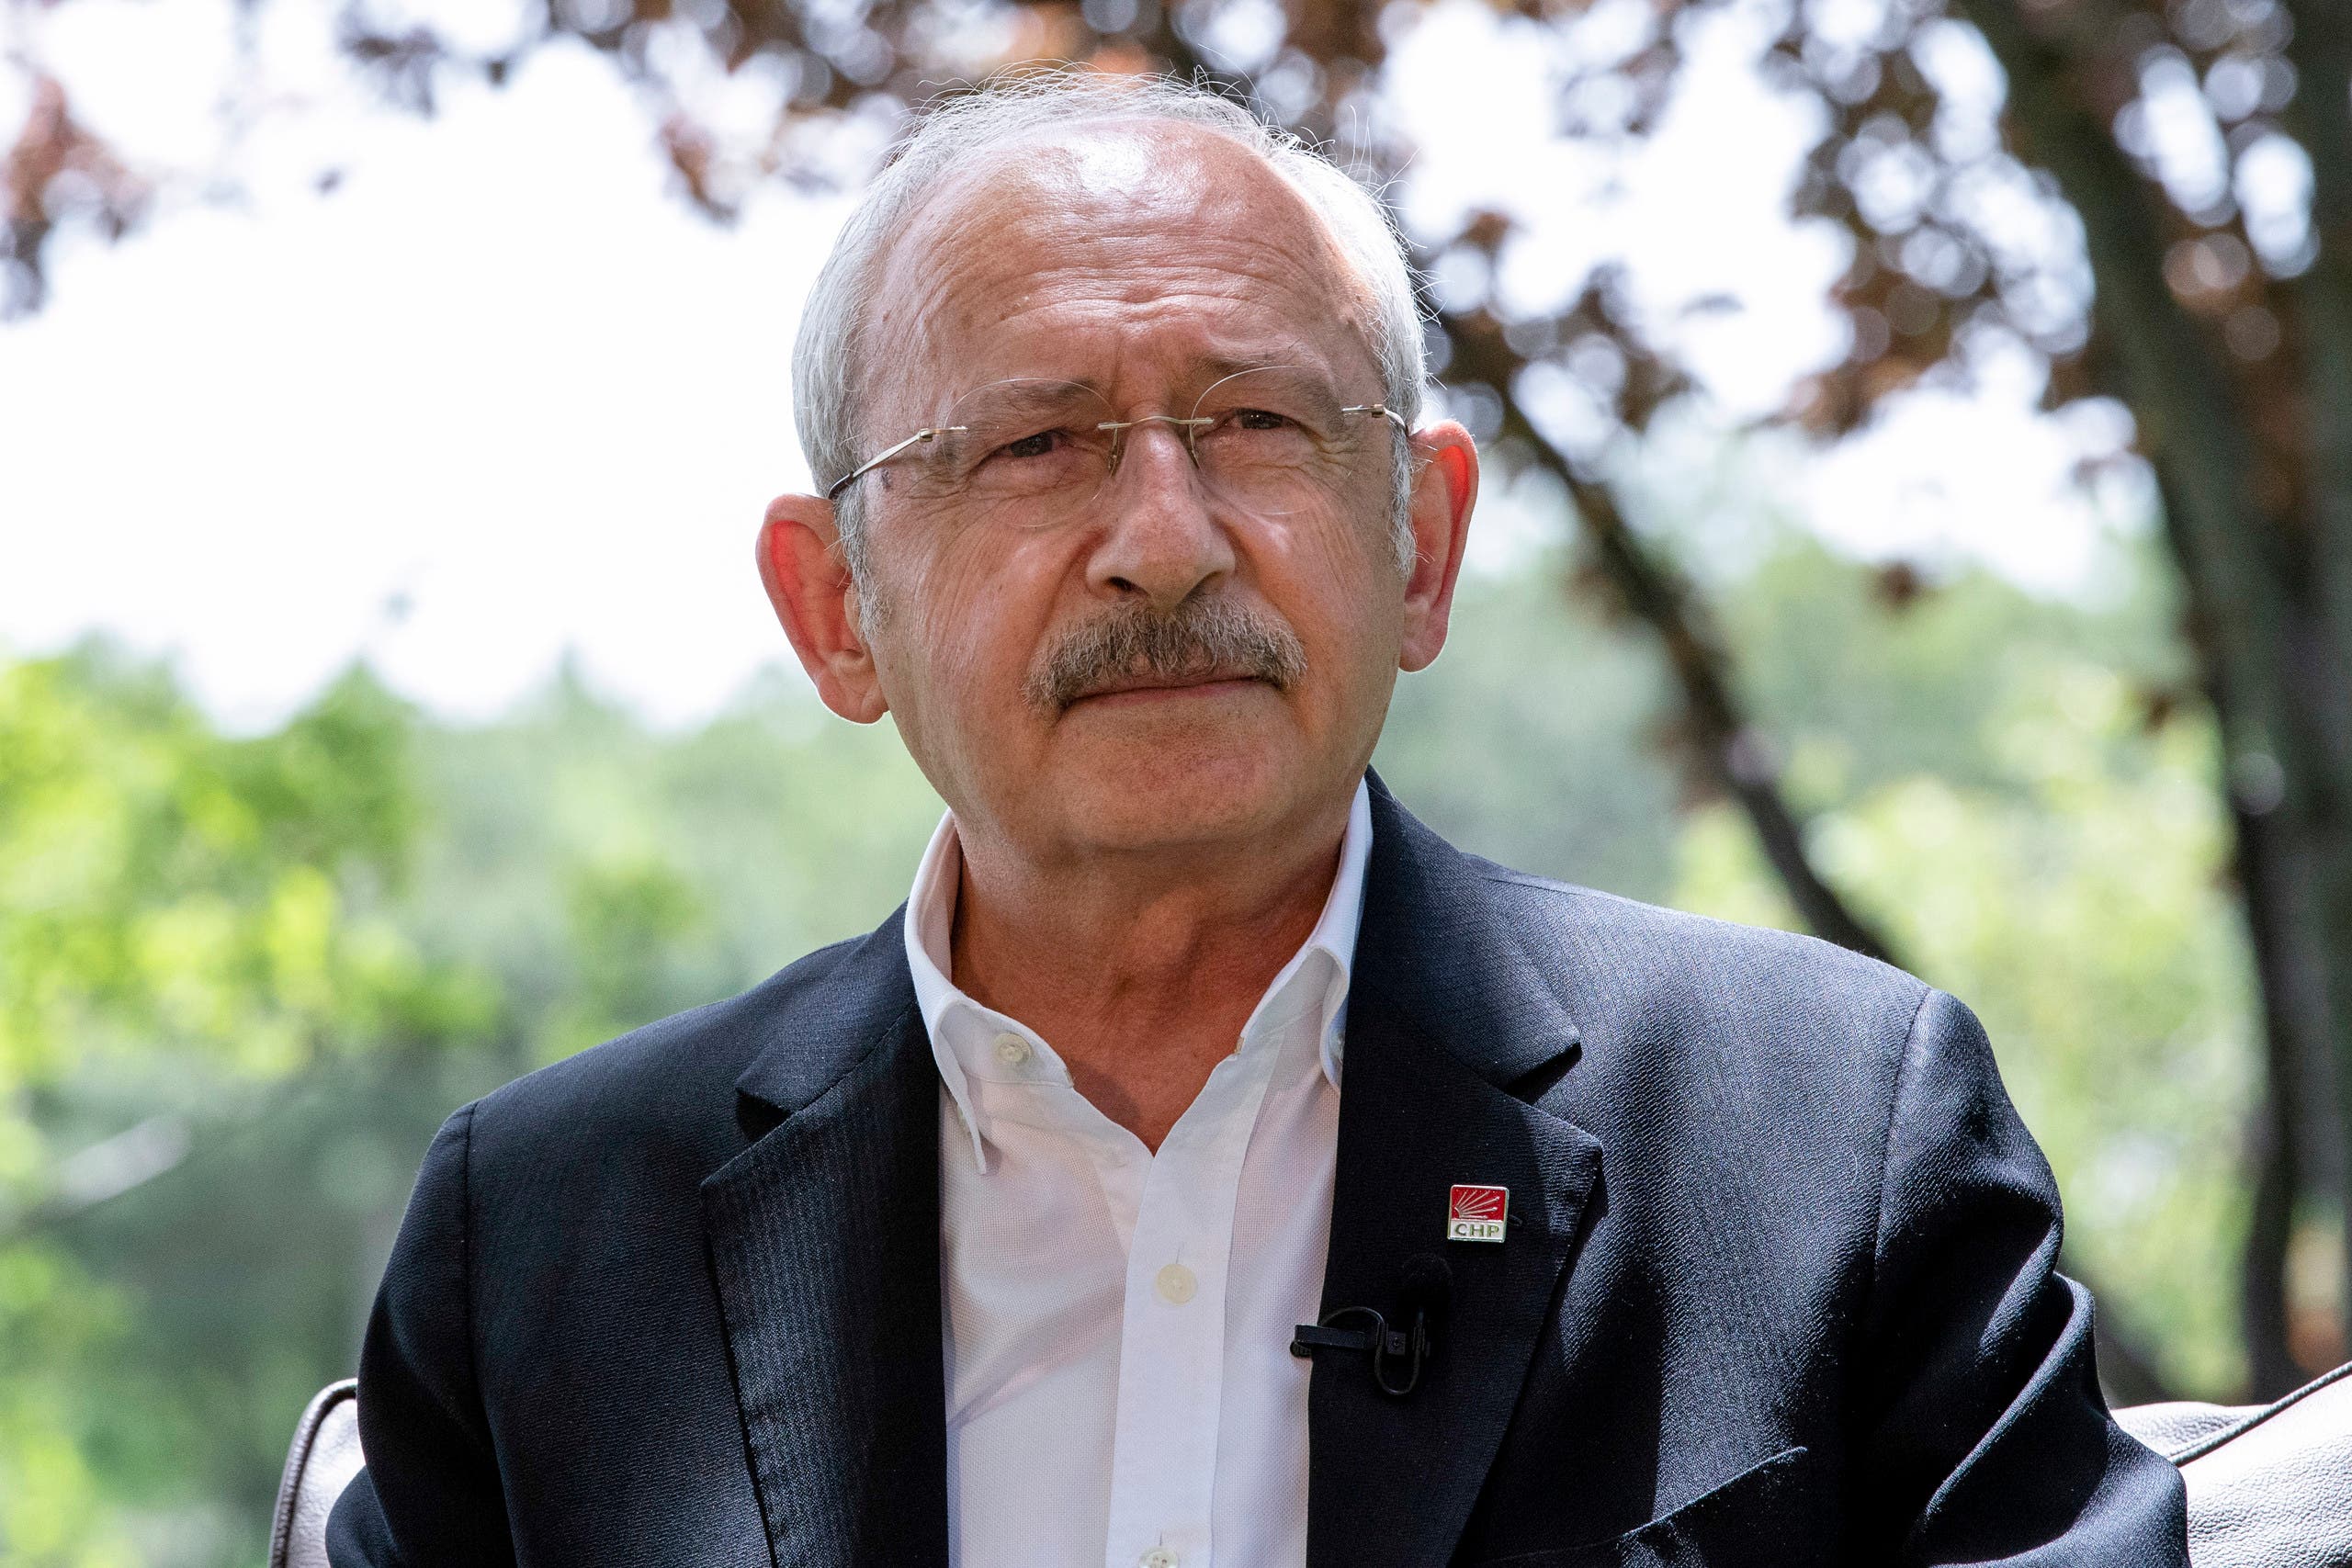 Kılıçdaroğlu, president of the Republican People's Party